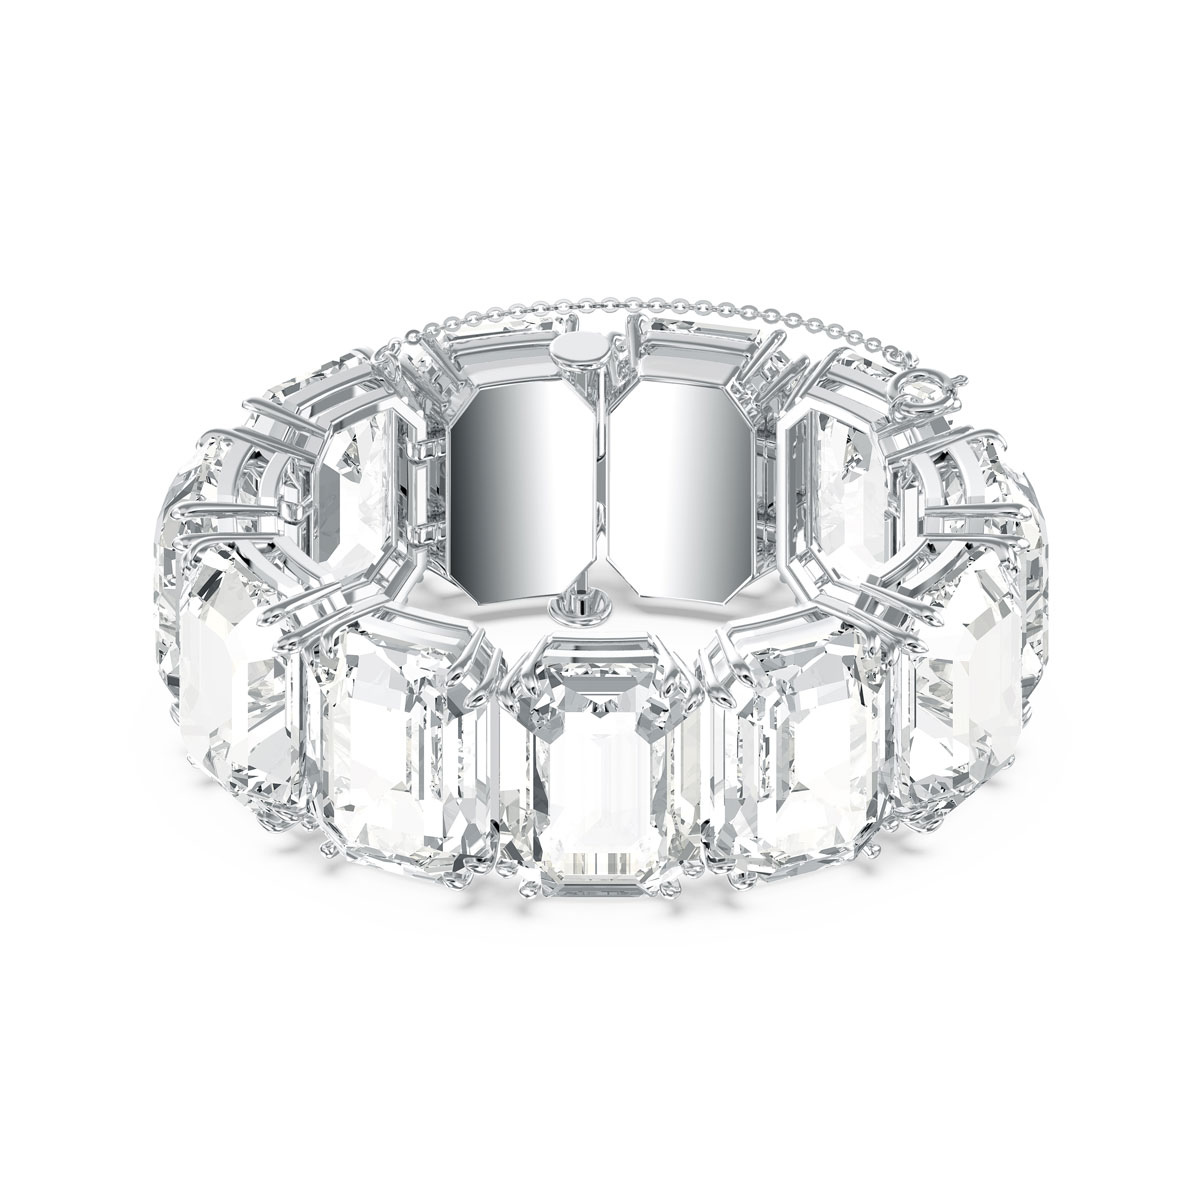 Swarovski Millenia Bracelet, Octagon Cut Crystals, White, Rhodium Plated